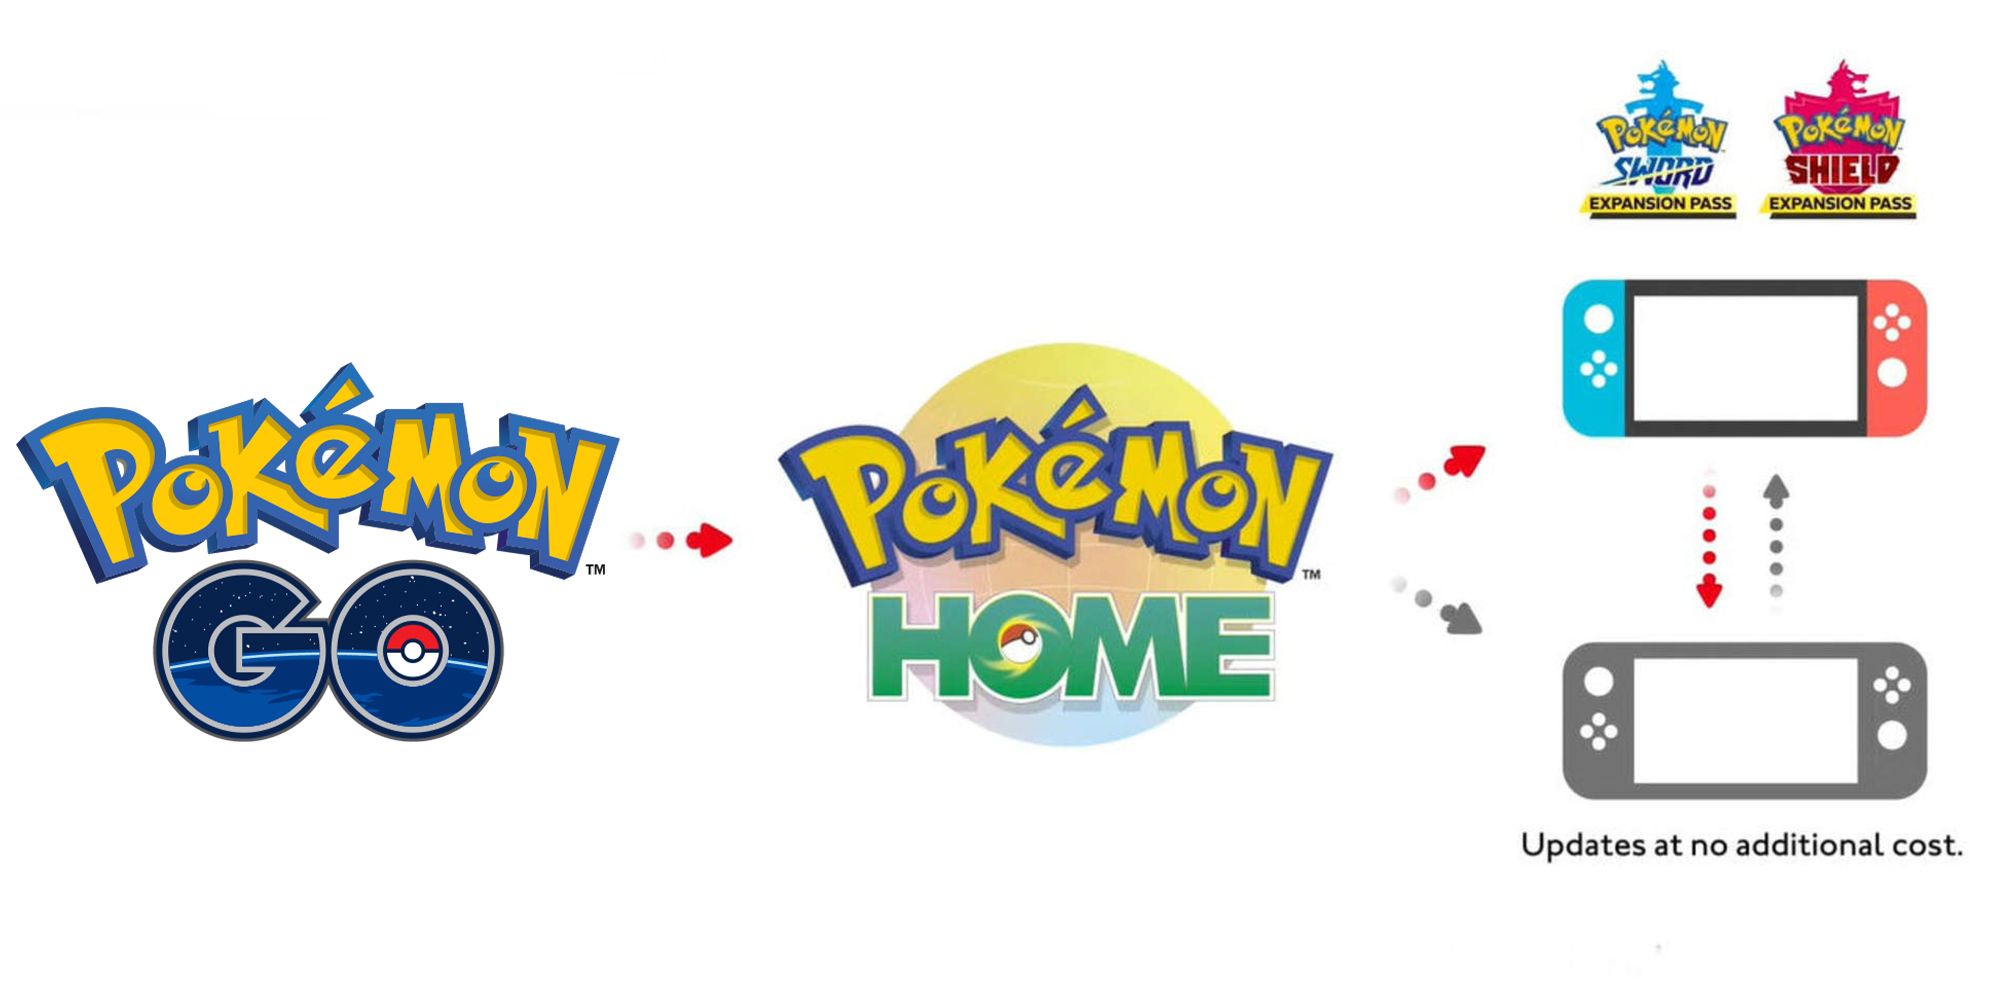 Pokemon Go Pokemon Home